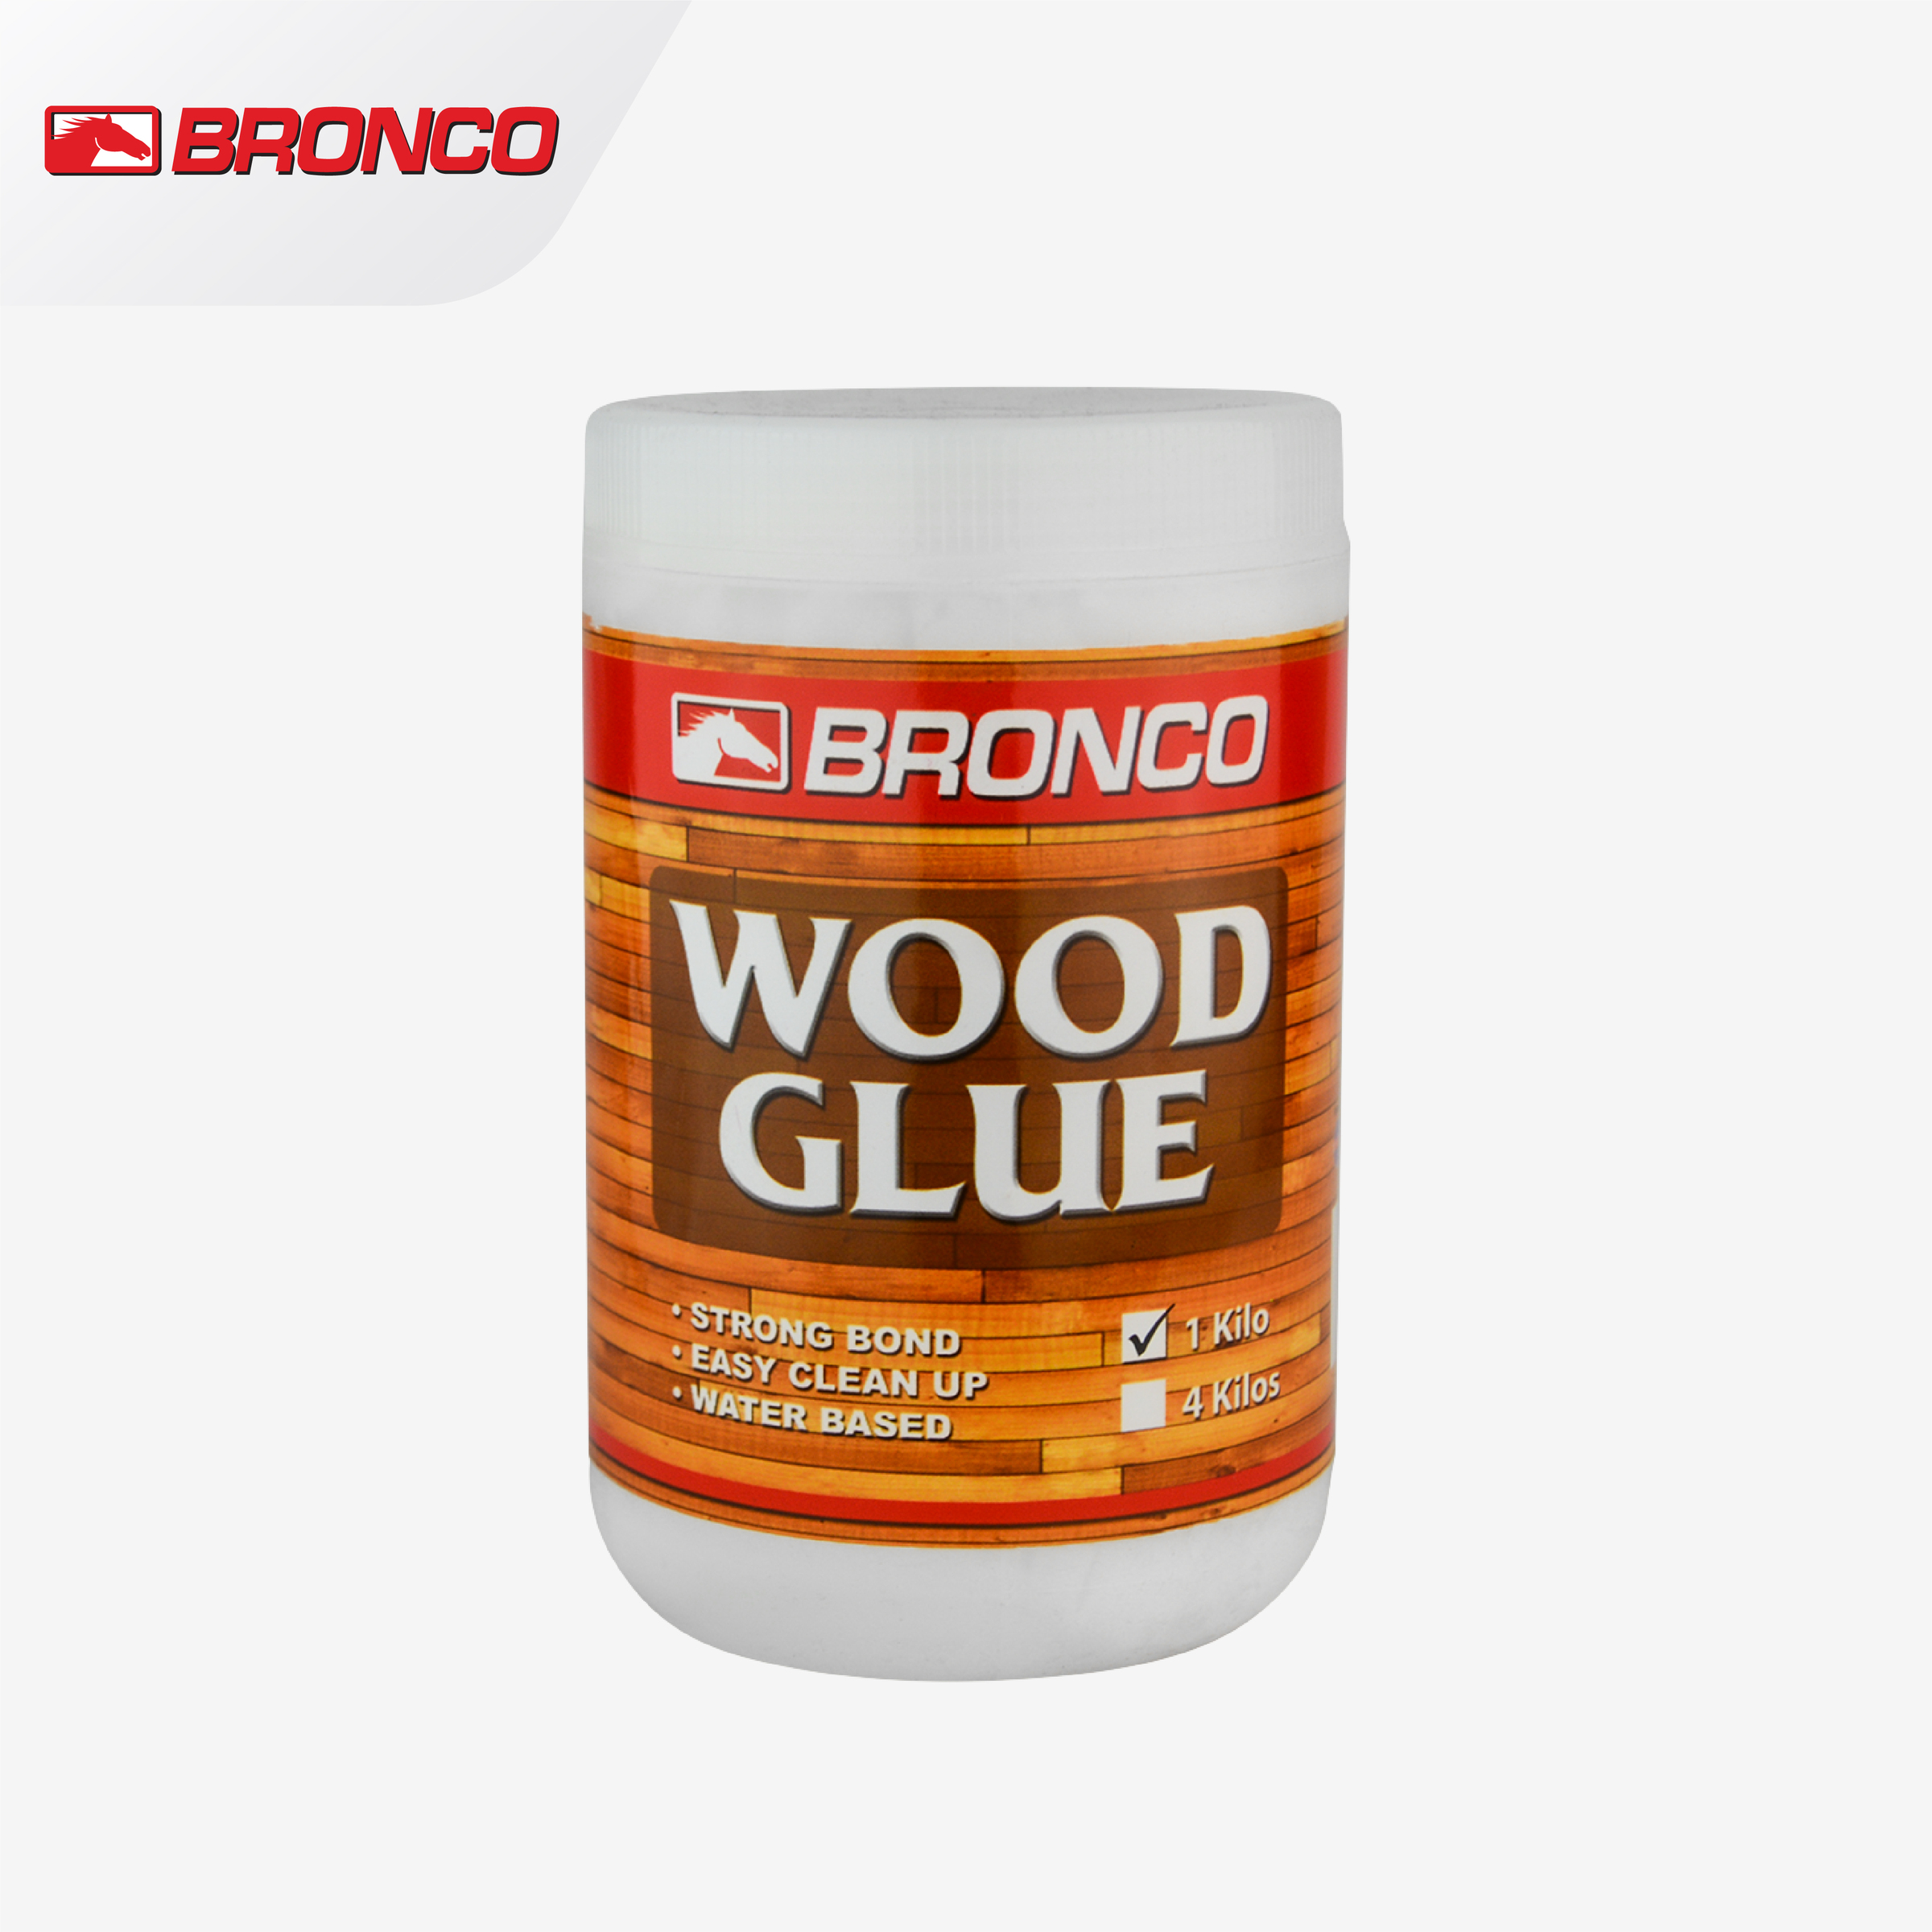 Bronco Wood Glue